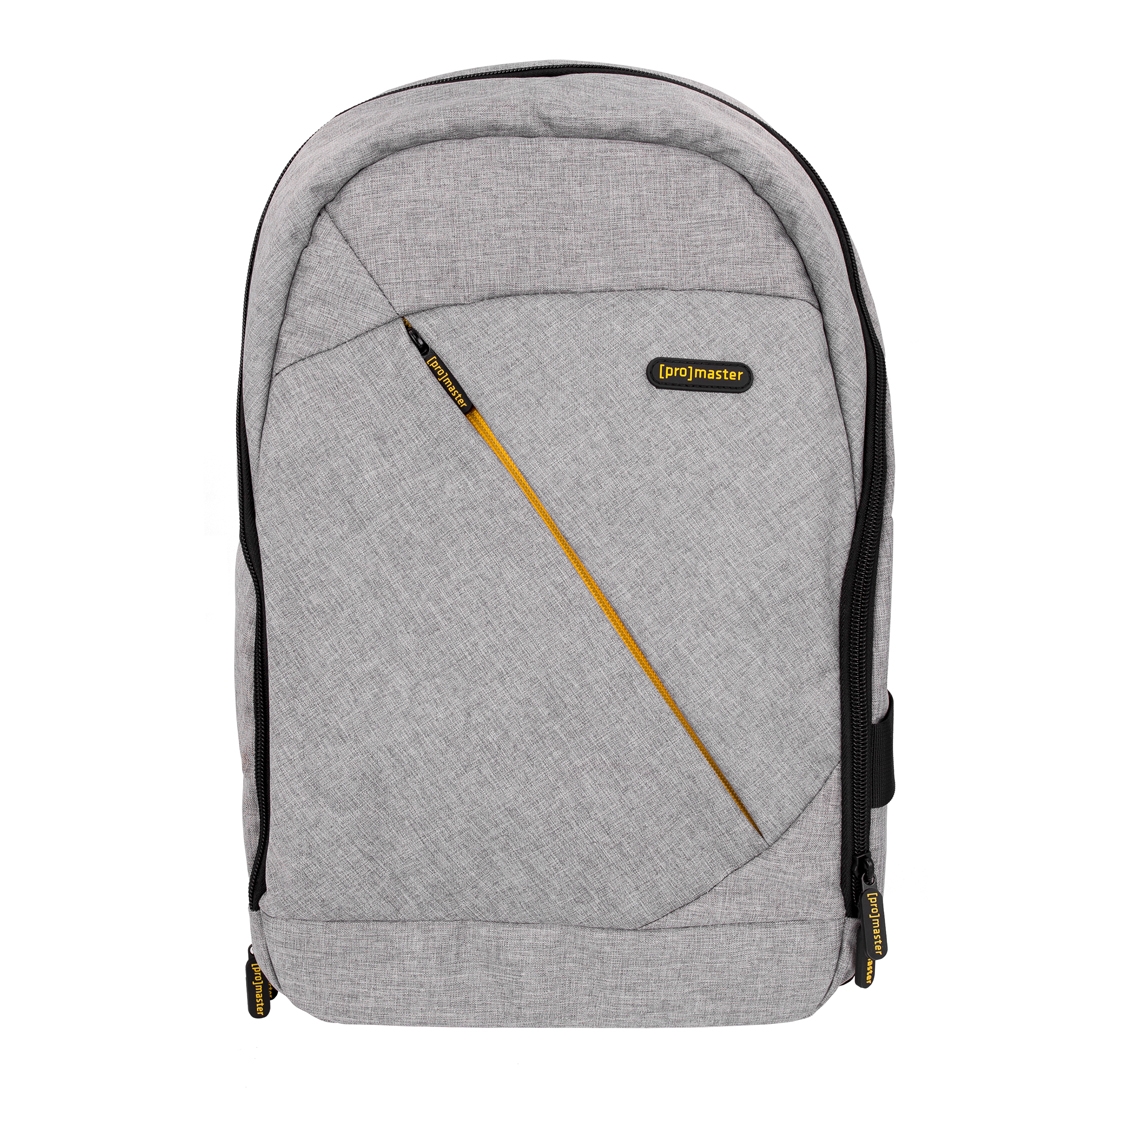 Promaster Impulse Sling Bag Large (grey)